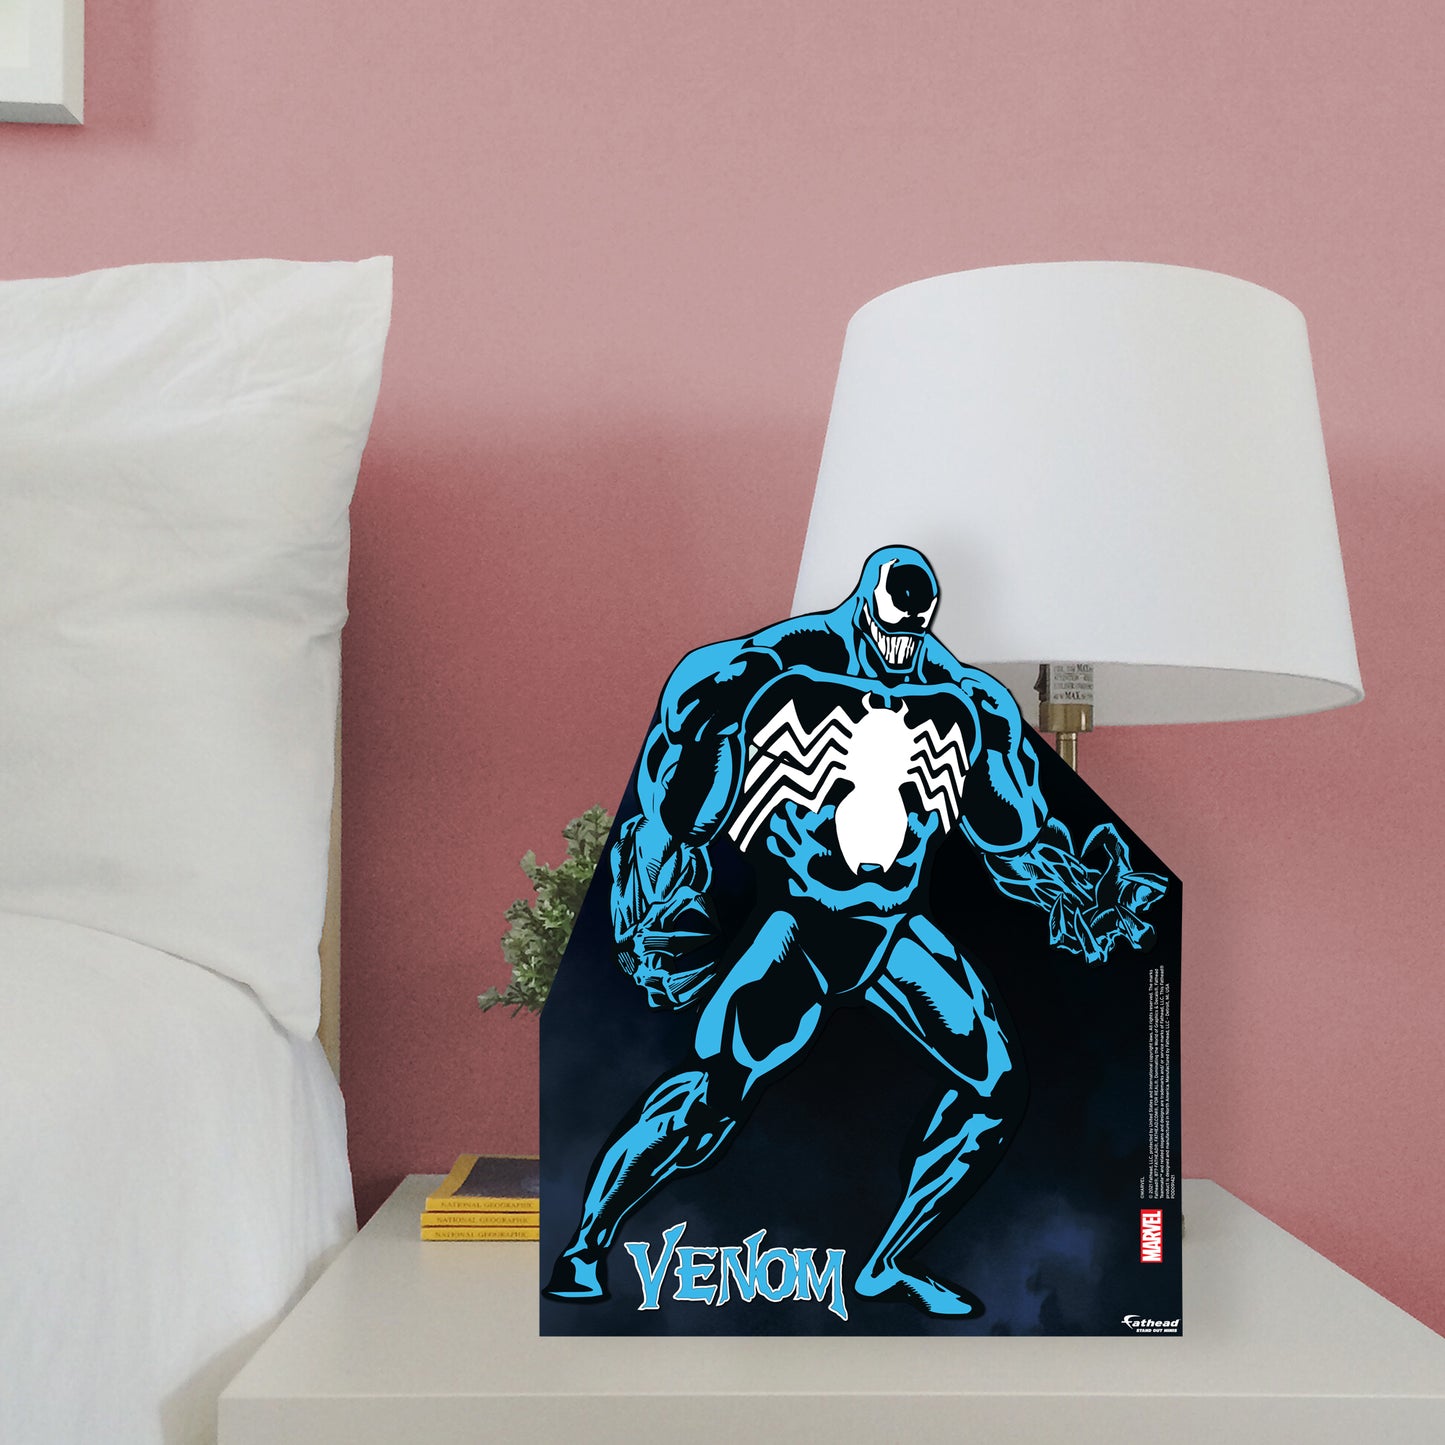 Venom: Venom Retro  Mini   Cardstock Cutout  - Officially Licensed Marvel    Stand Out